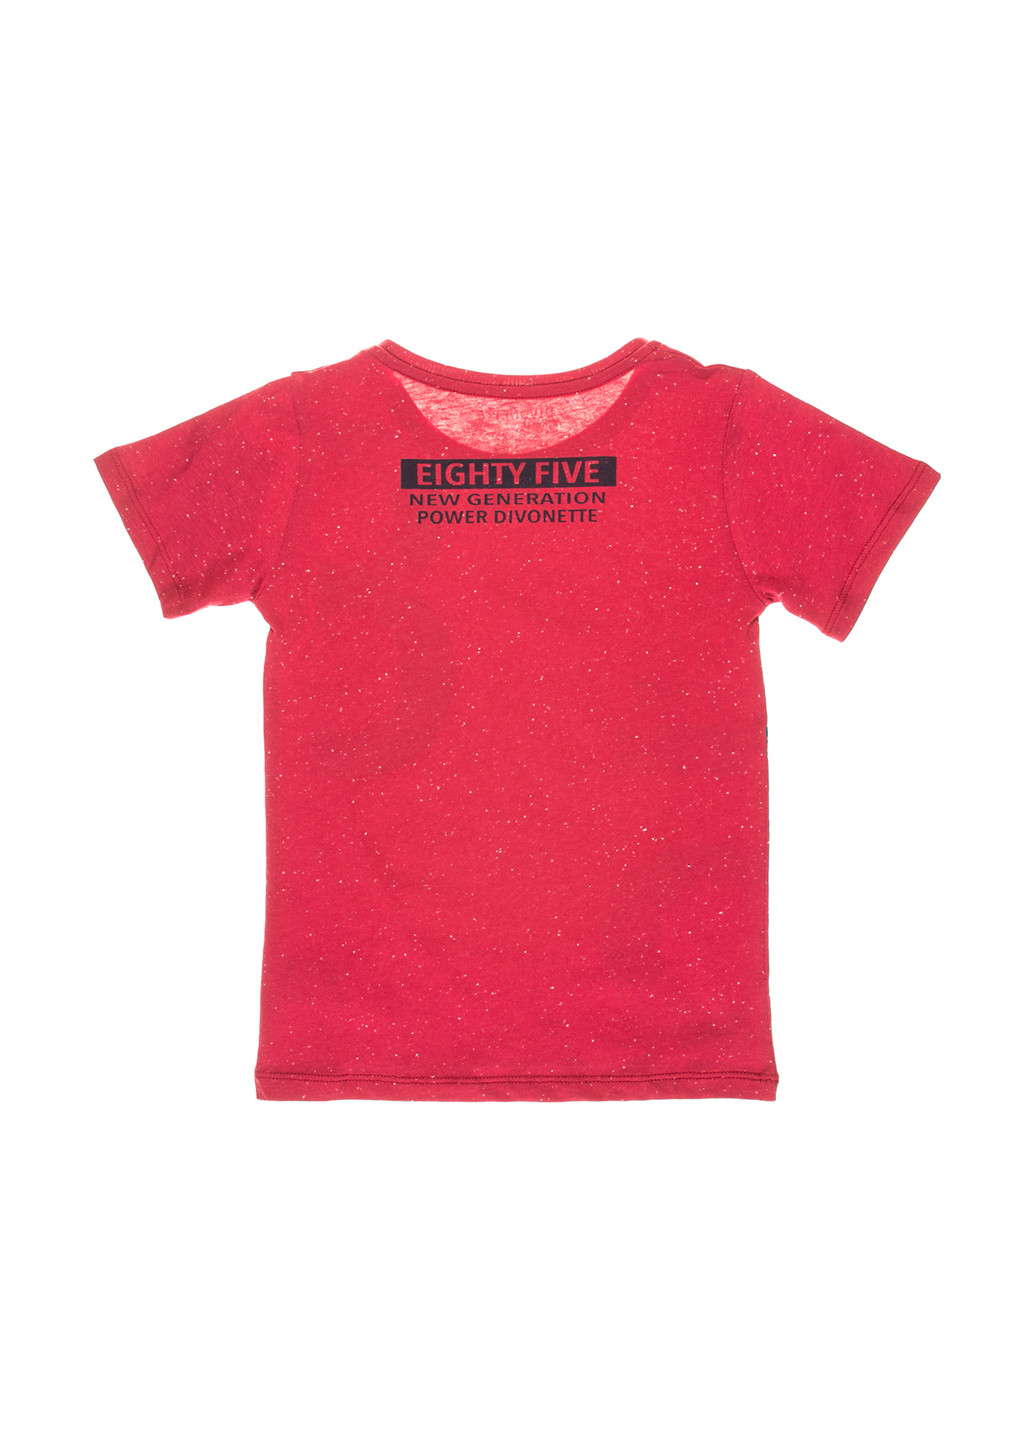 Бордовая летняя футболка с коротким рукавом Divonette